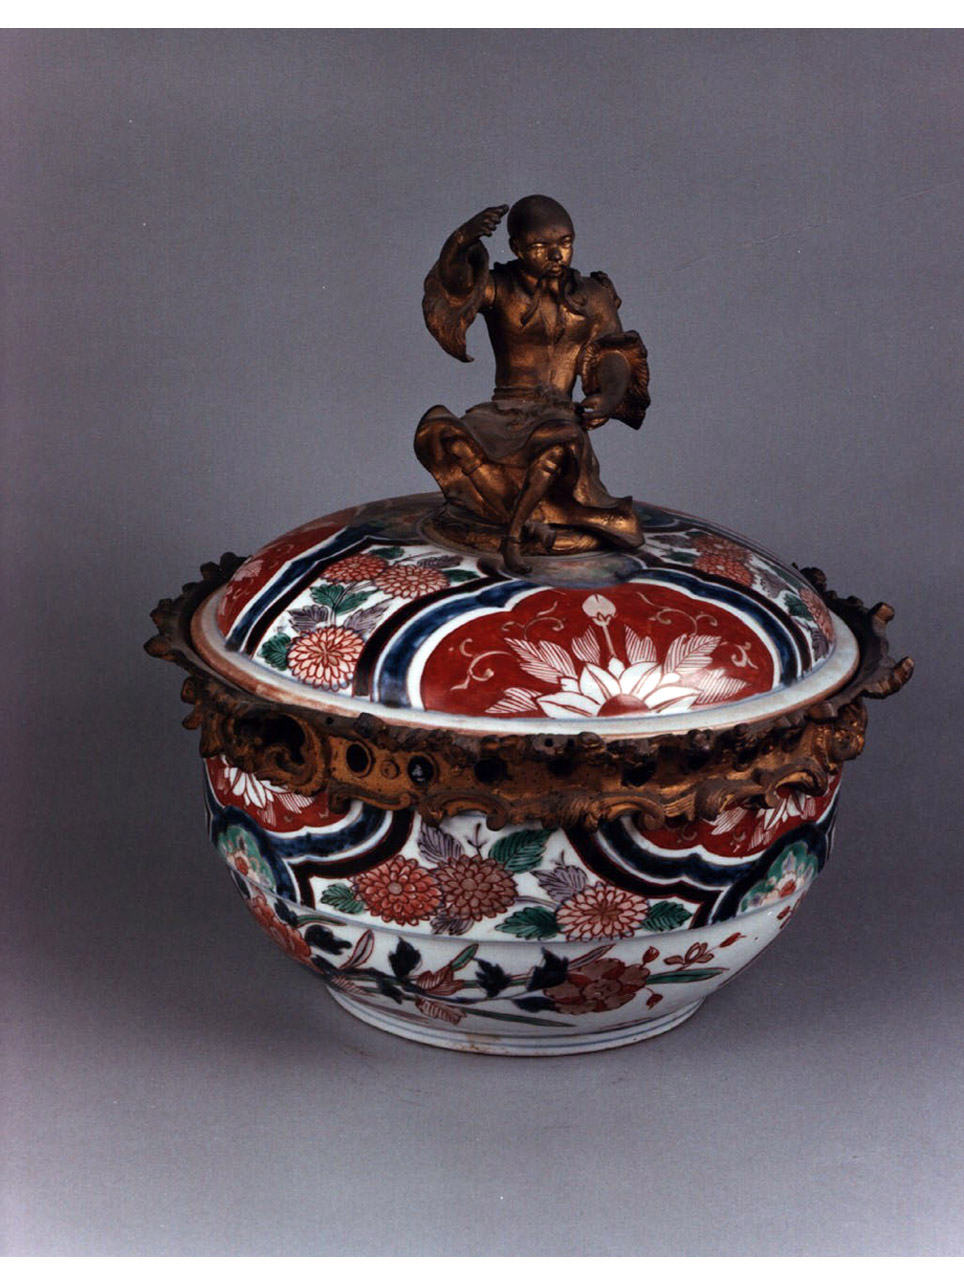 figura maschile/ motivi decorativi fitomorfi (pot-pourri) - manifattura di Arita, produzione europea (sec. XVIII)